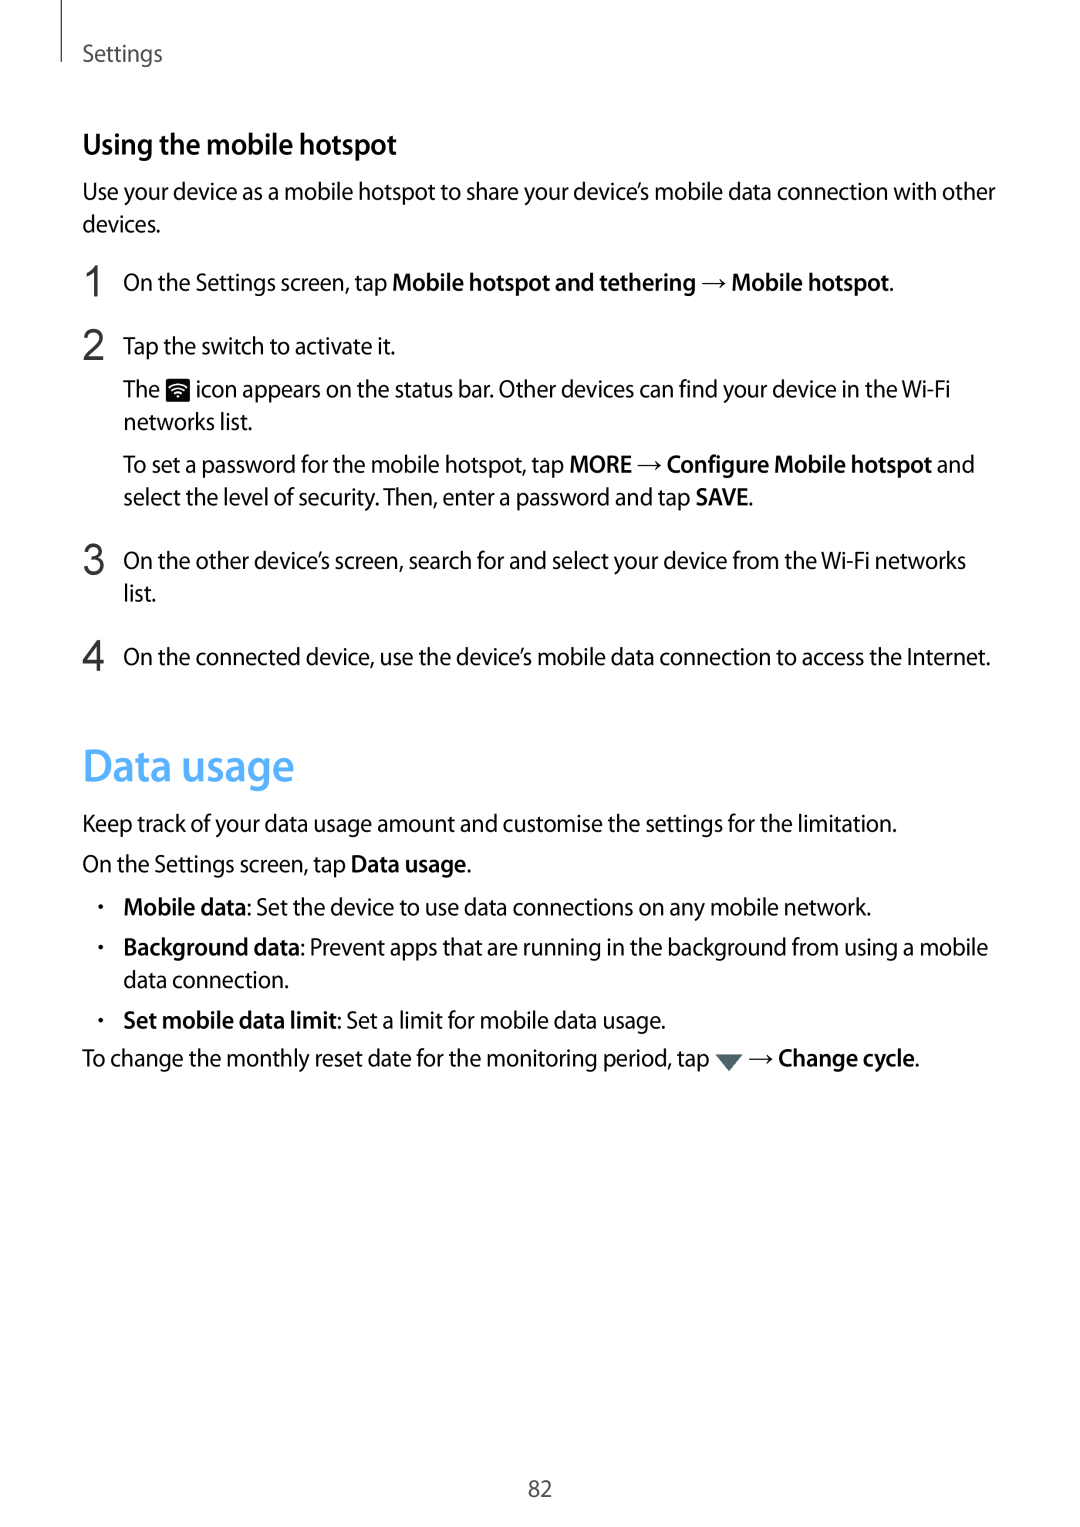 Samsung SM-T819NZKESEB, SM-T819NZKEDBT, SM-T719NZKEDBT, SM-T719NZWEDBT manual Data usage, Using the mobile hotspot, Settings 